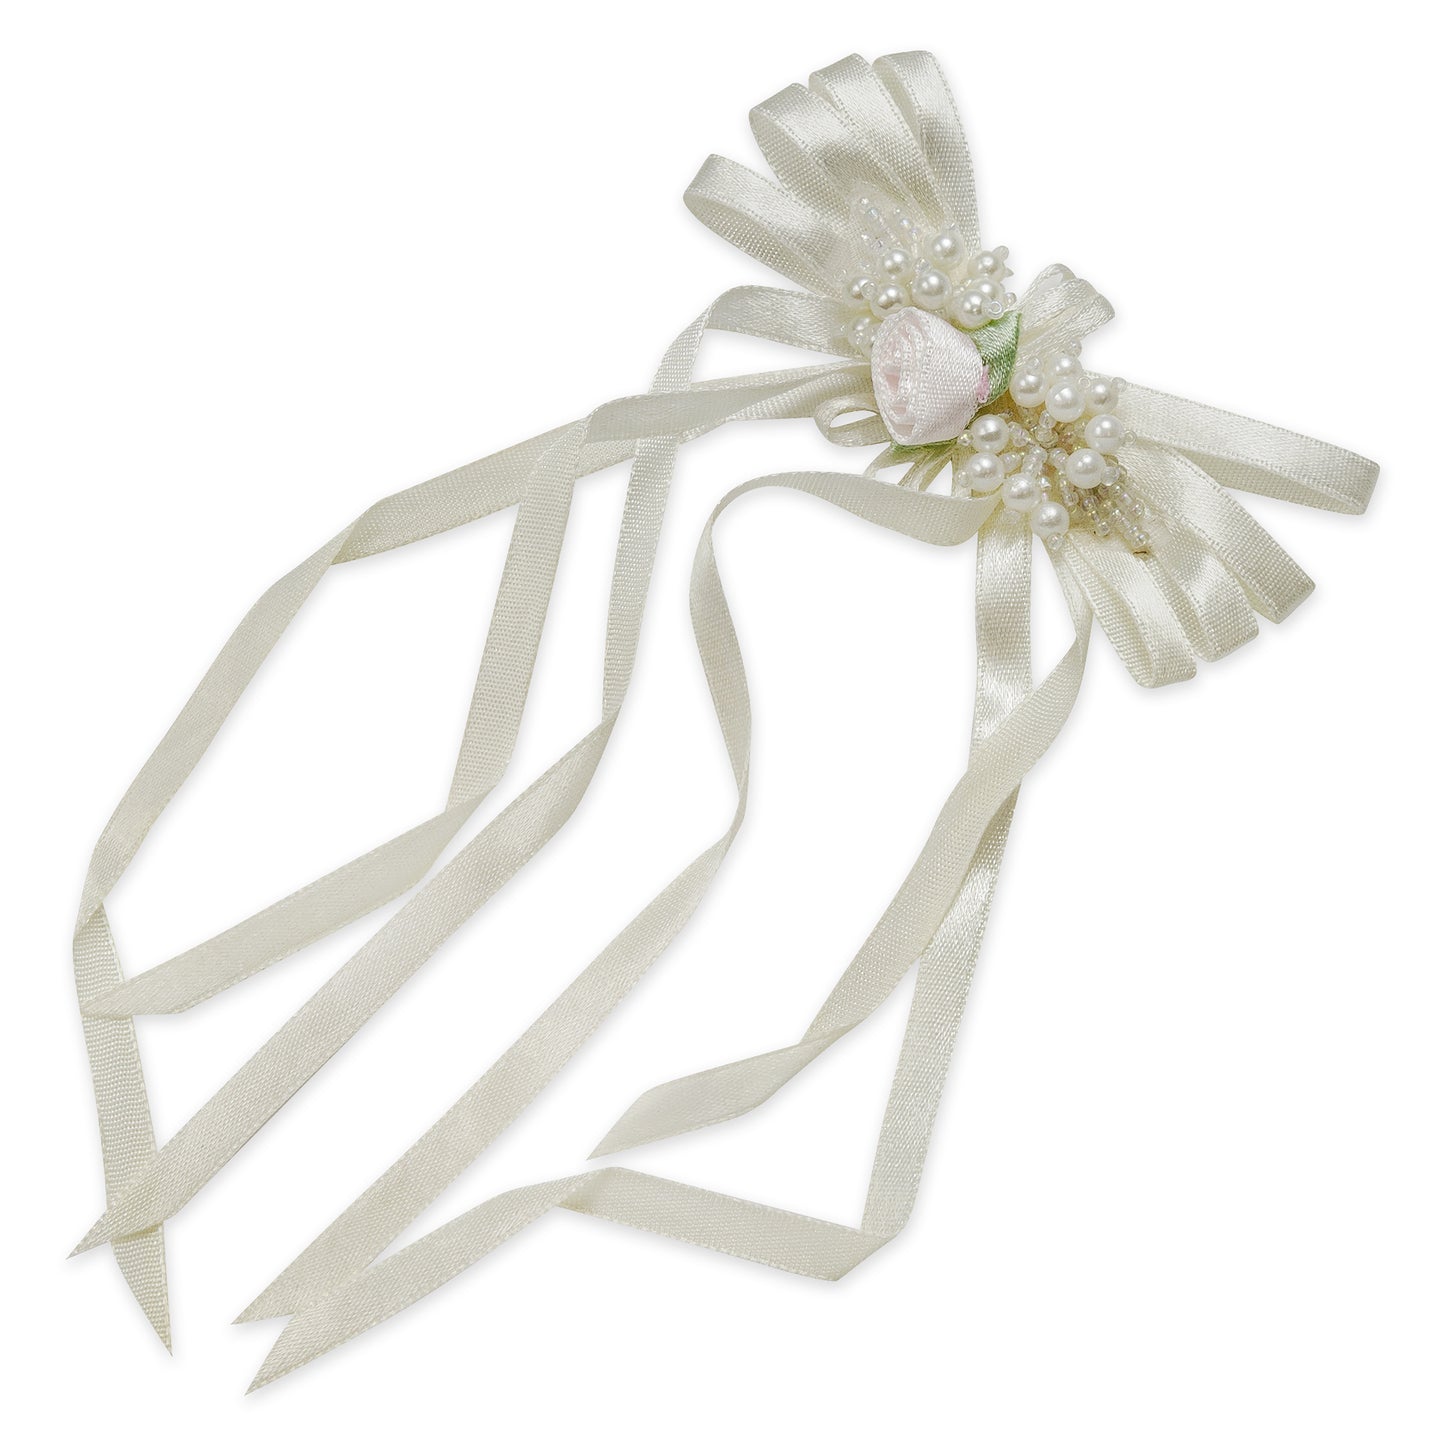 Vintage Bridal Satin Rose Bow Ornament Applique